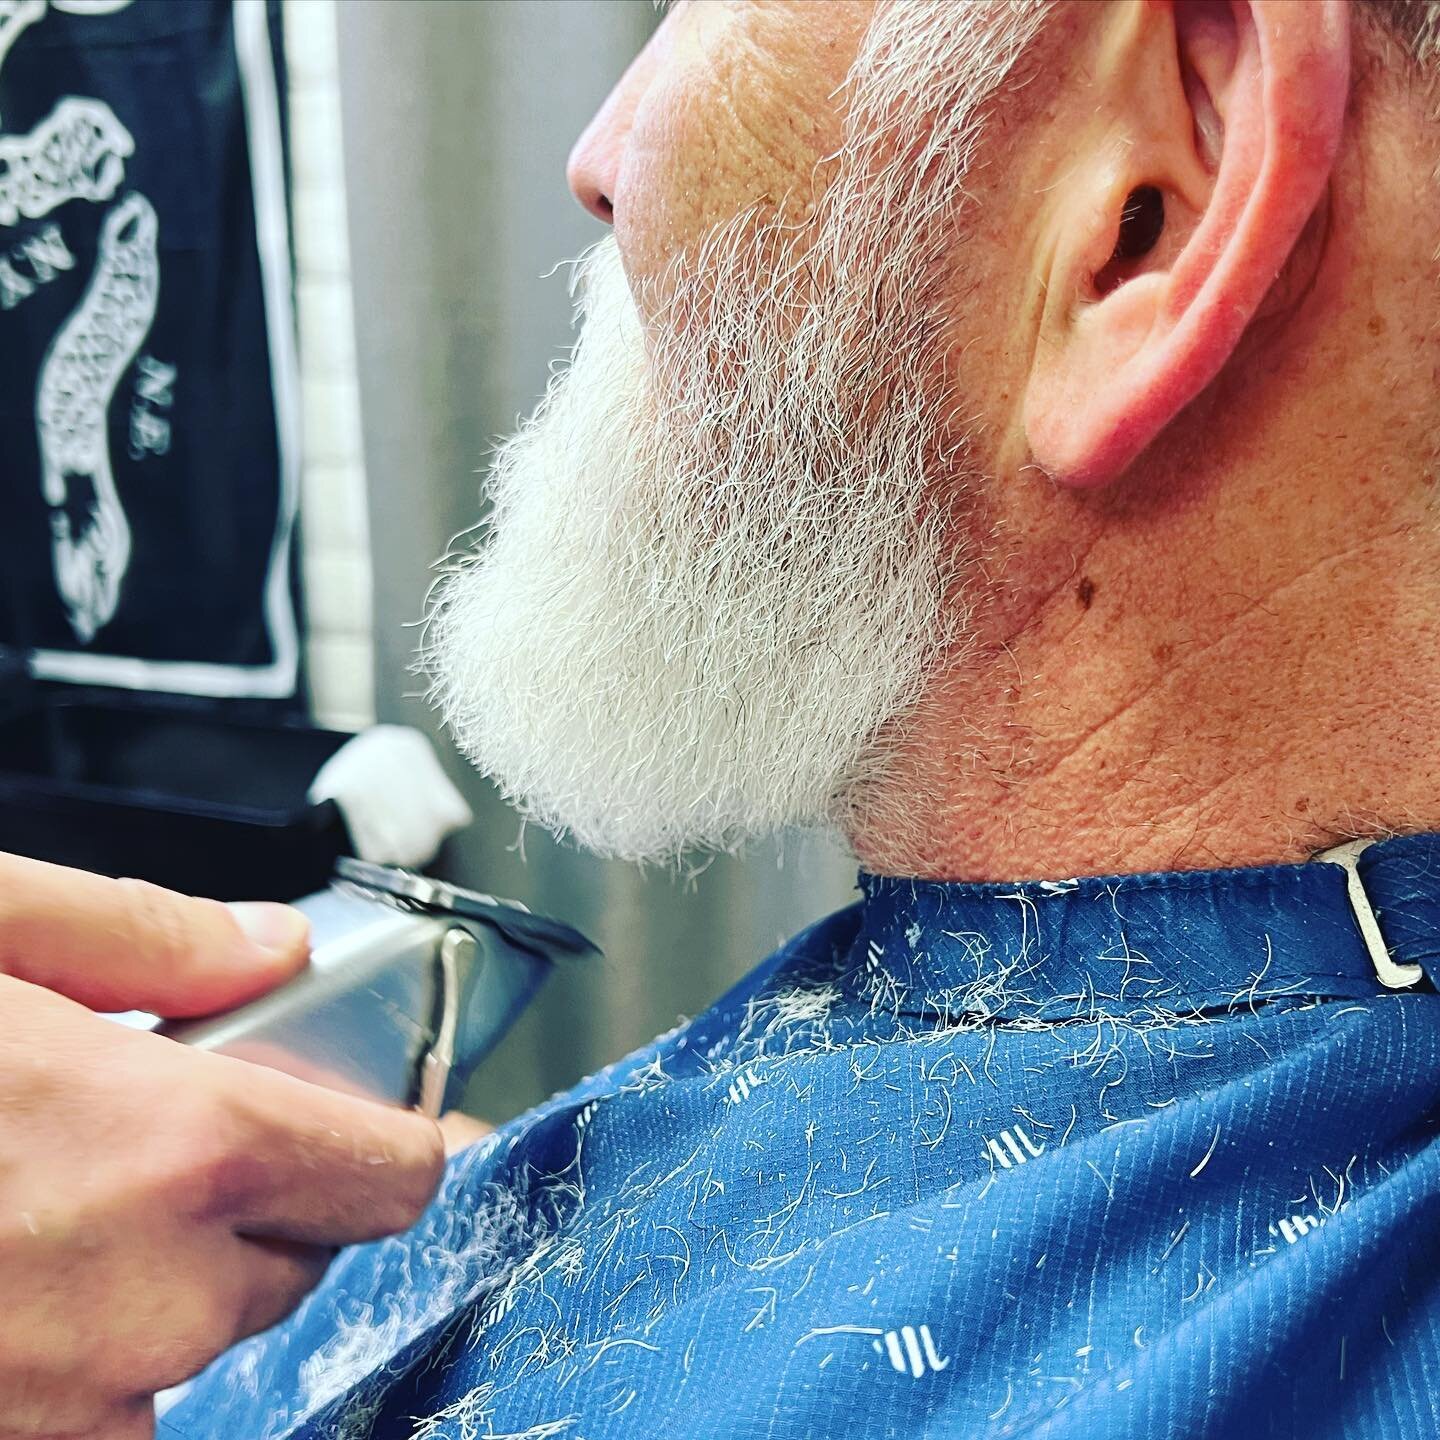 The Big Man getting cleaned up before the big night tomorrow. 🎅🏼🎄 #americanforkbarber #americanforkbarbershop #utahcountybarber #utahcountybarbershop #barber #barbershop #barberlife #barbering #anvilbarberco #anvilbarbershop #mensgrooming #barbers